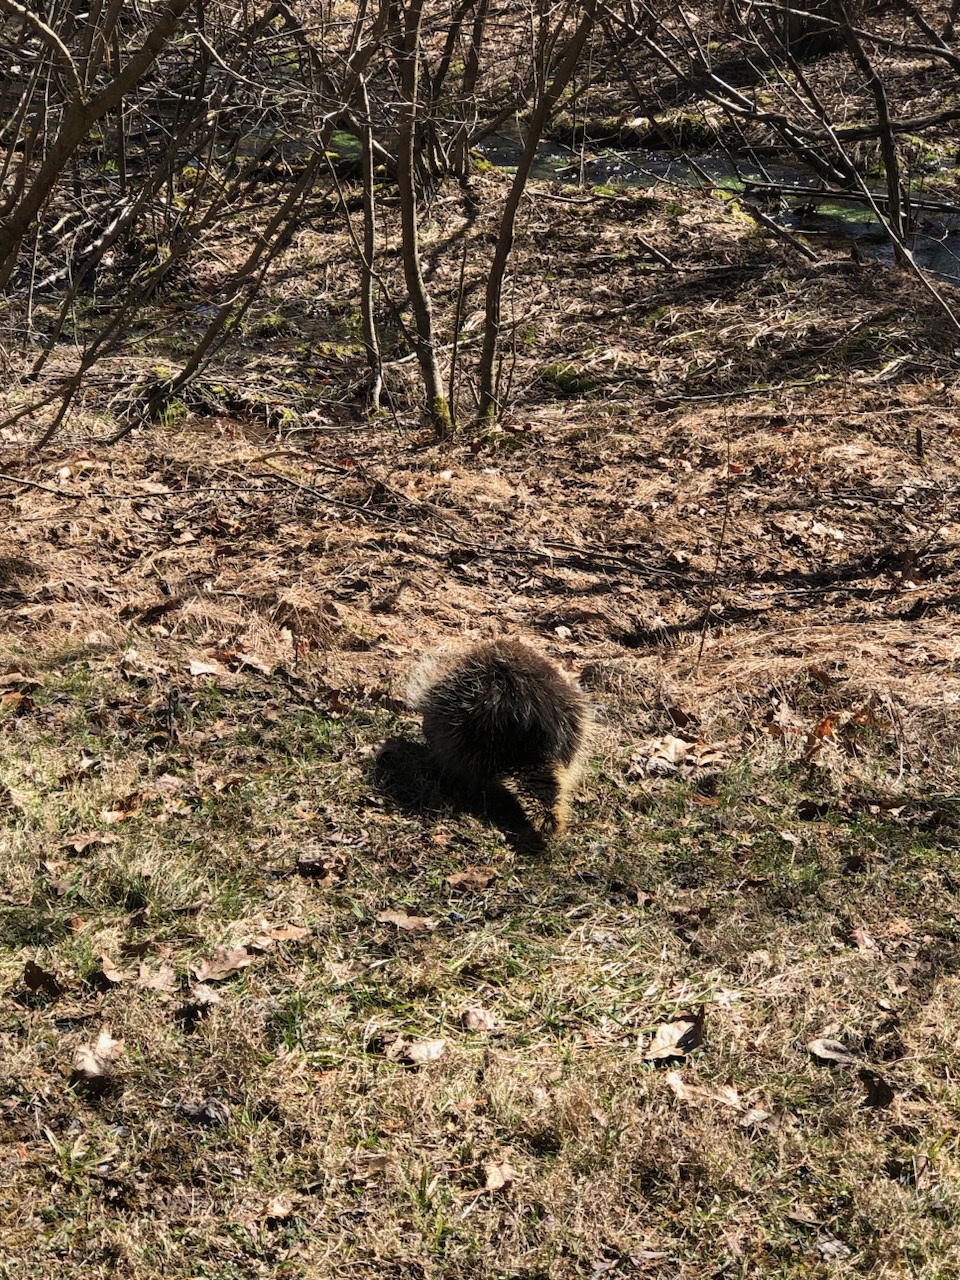 porcupine waddling away